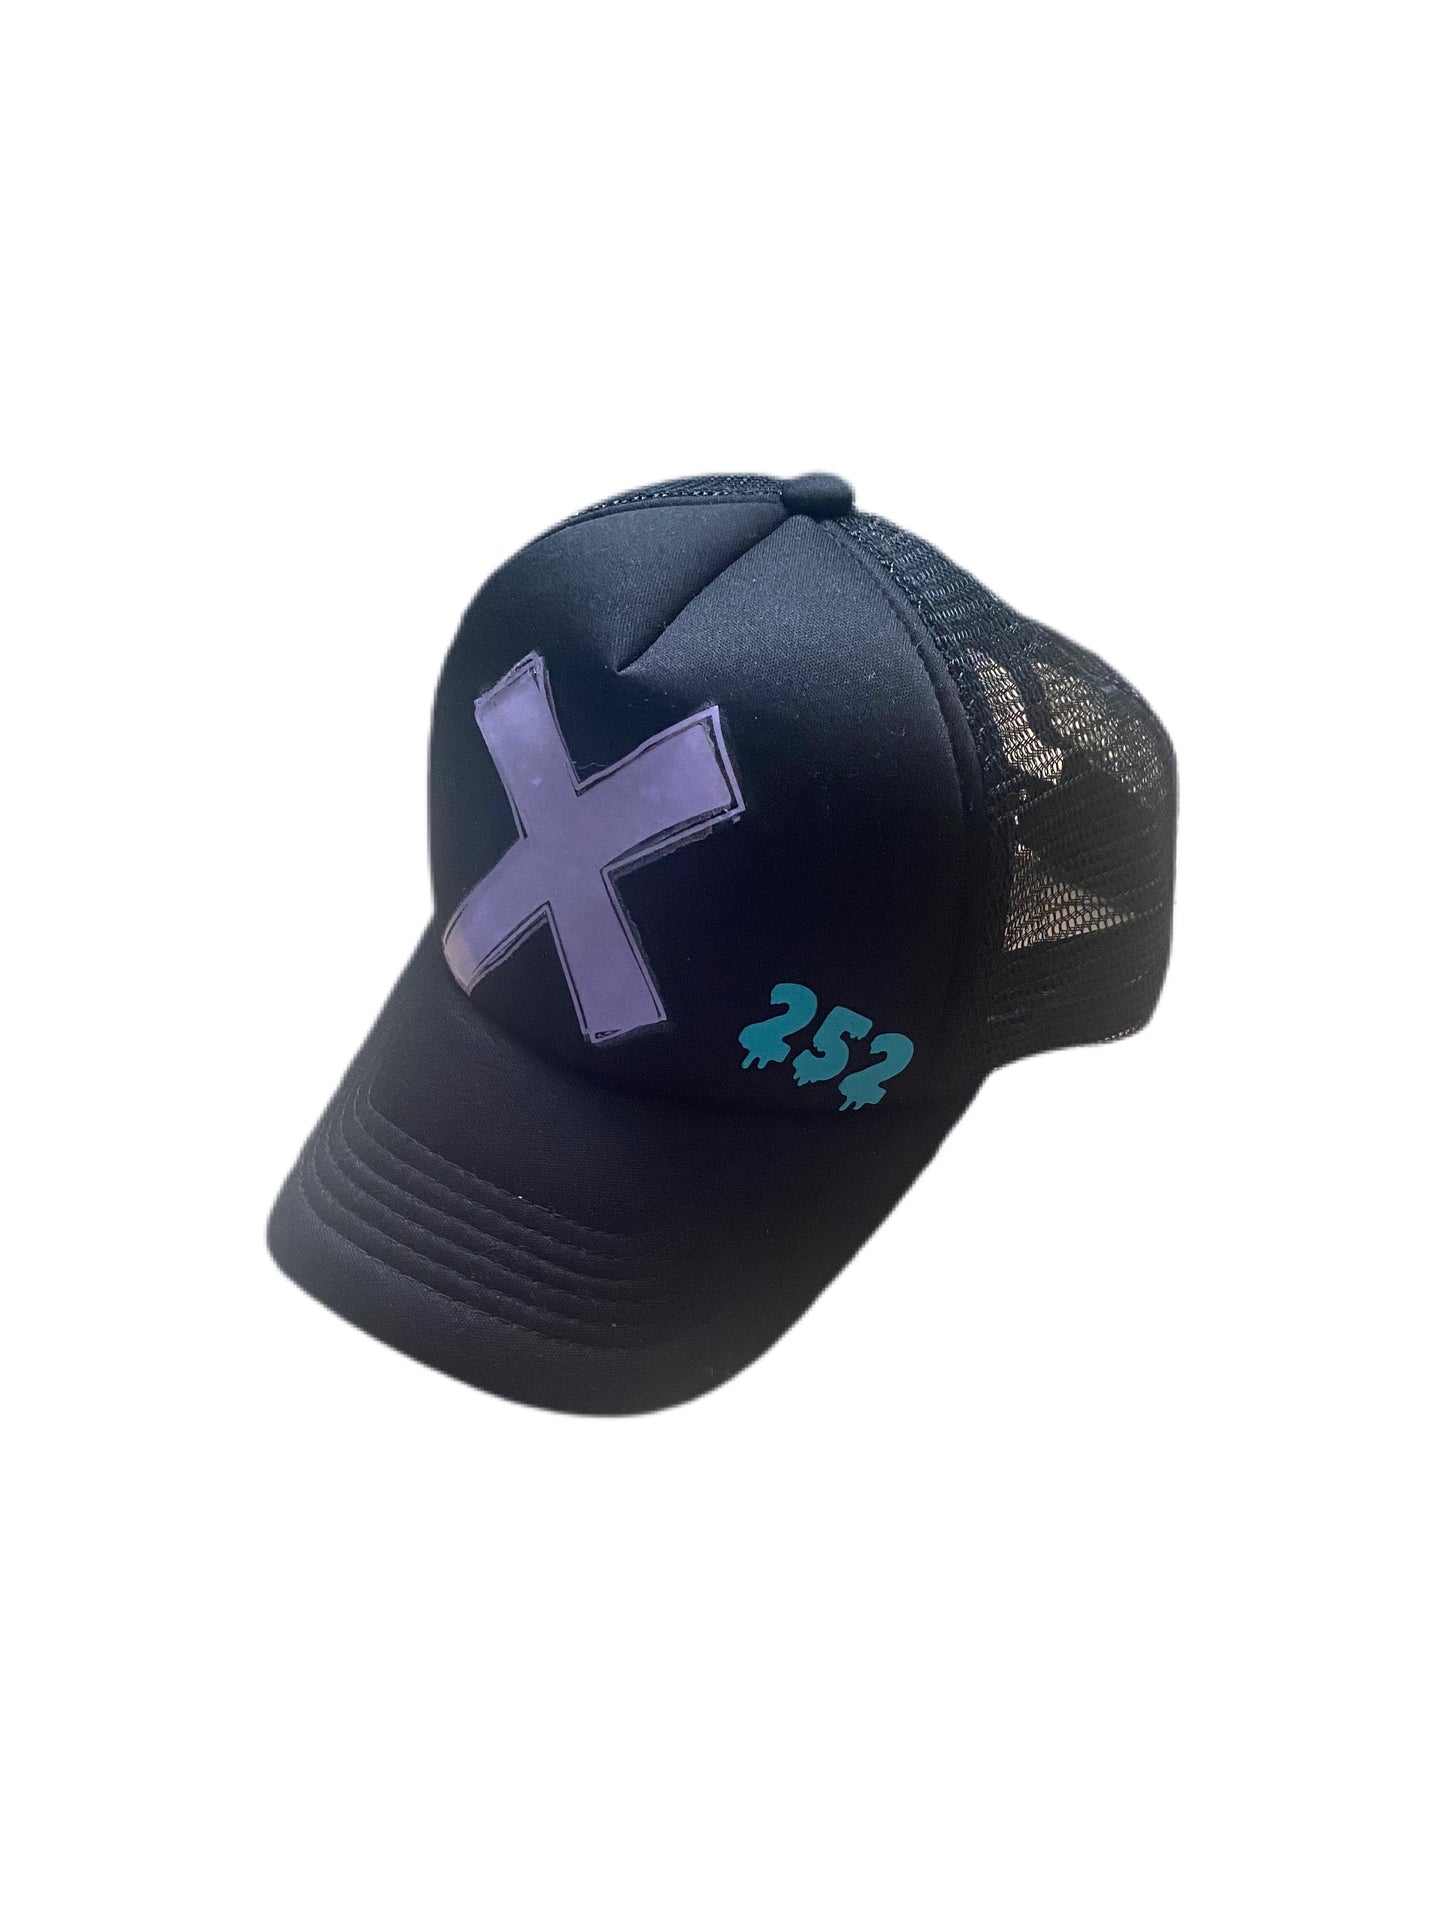 Trucker Hat - Unique x - 2fifty2